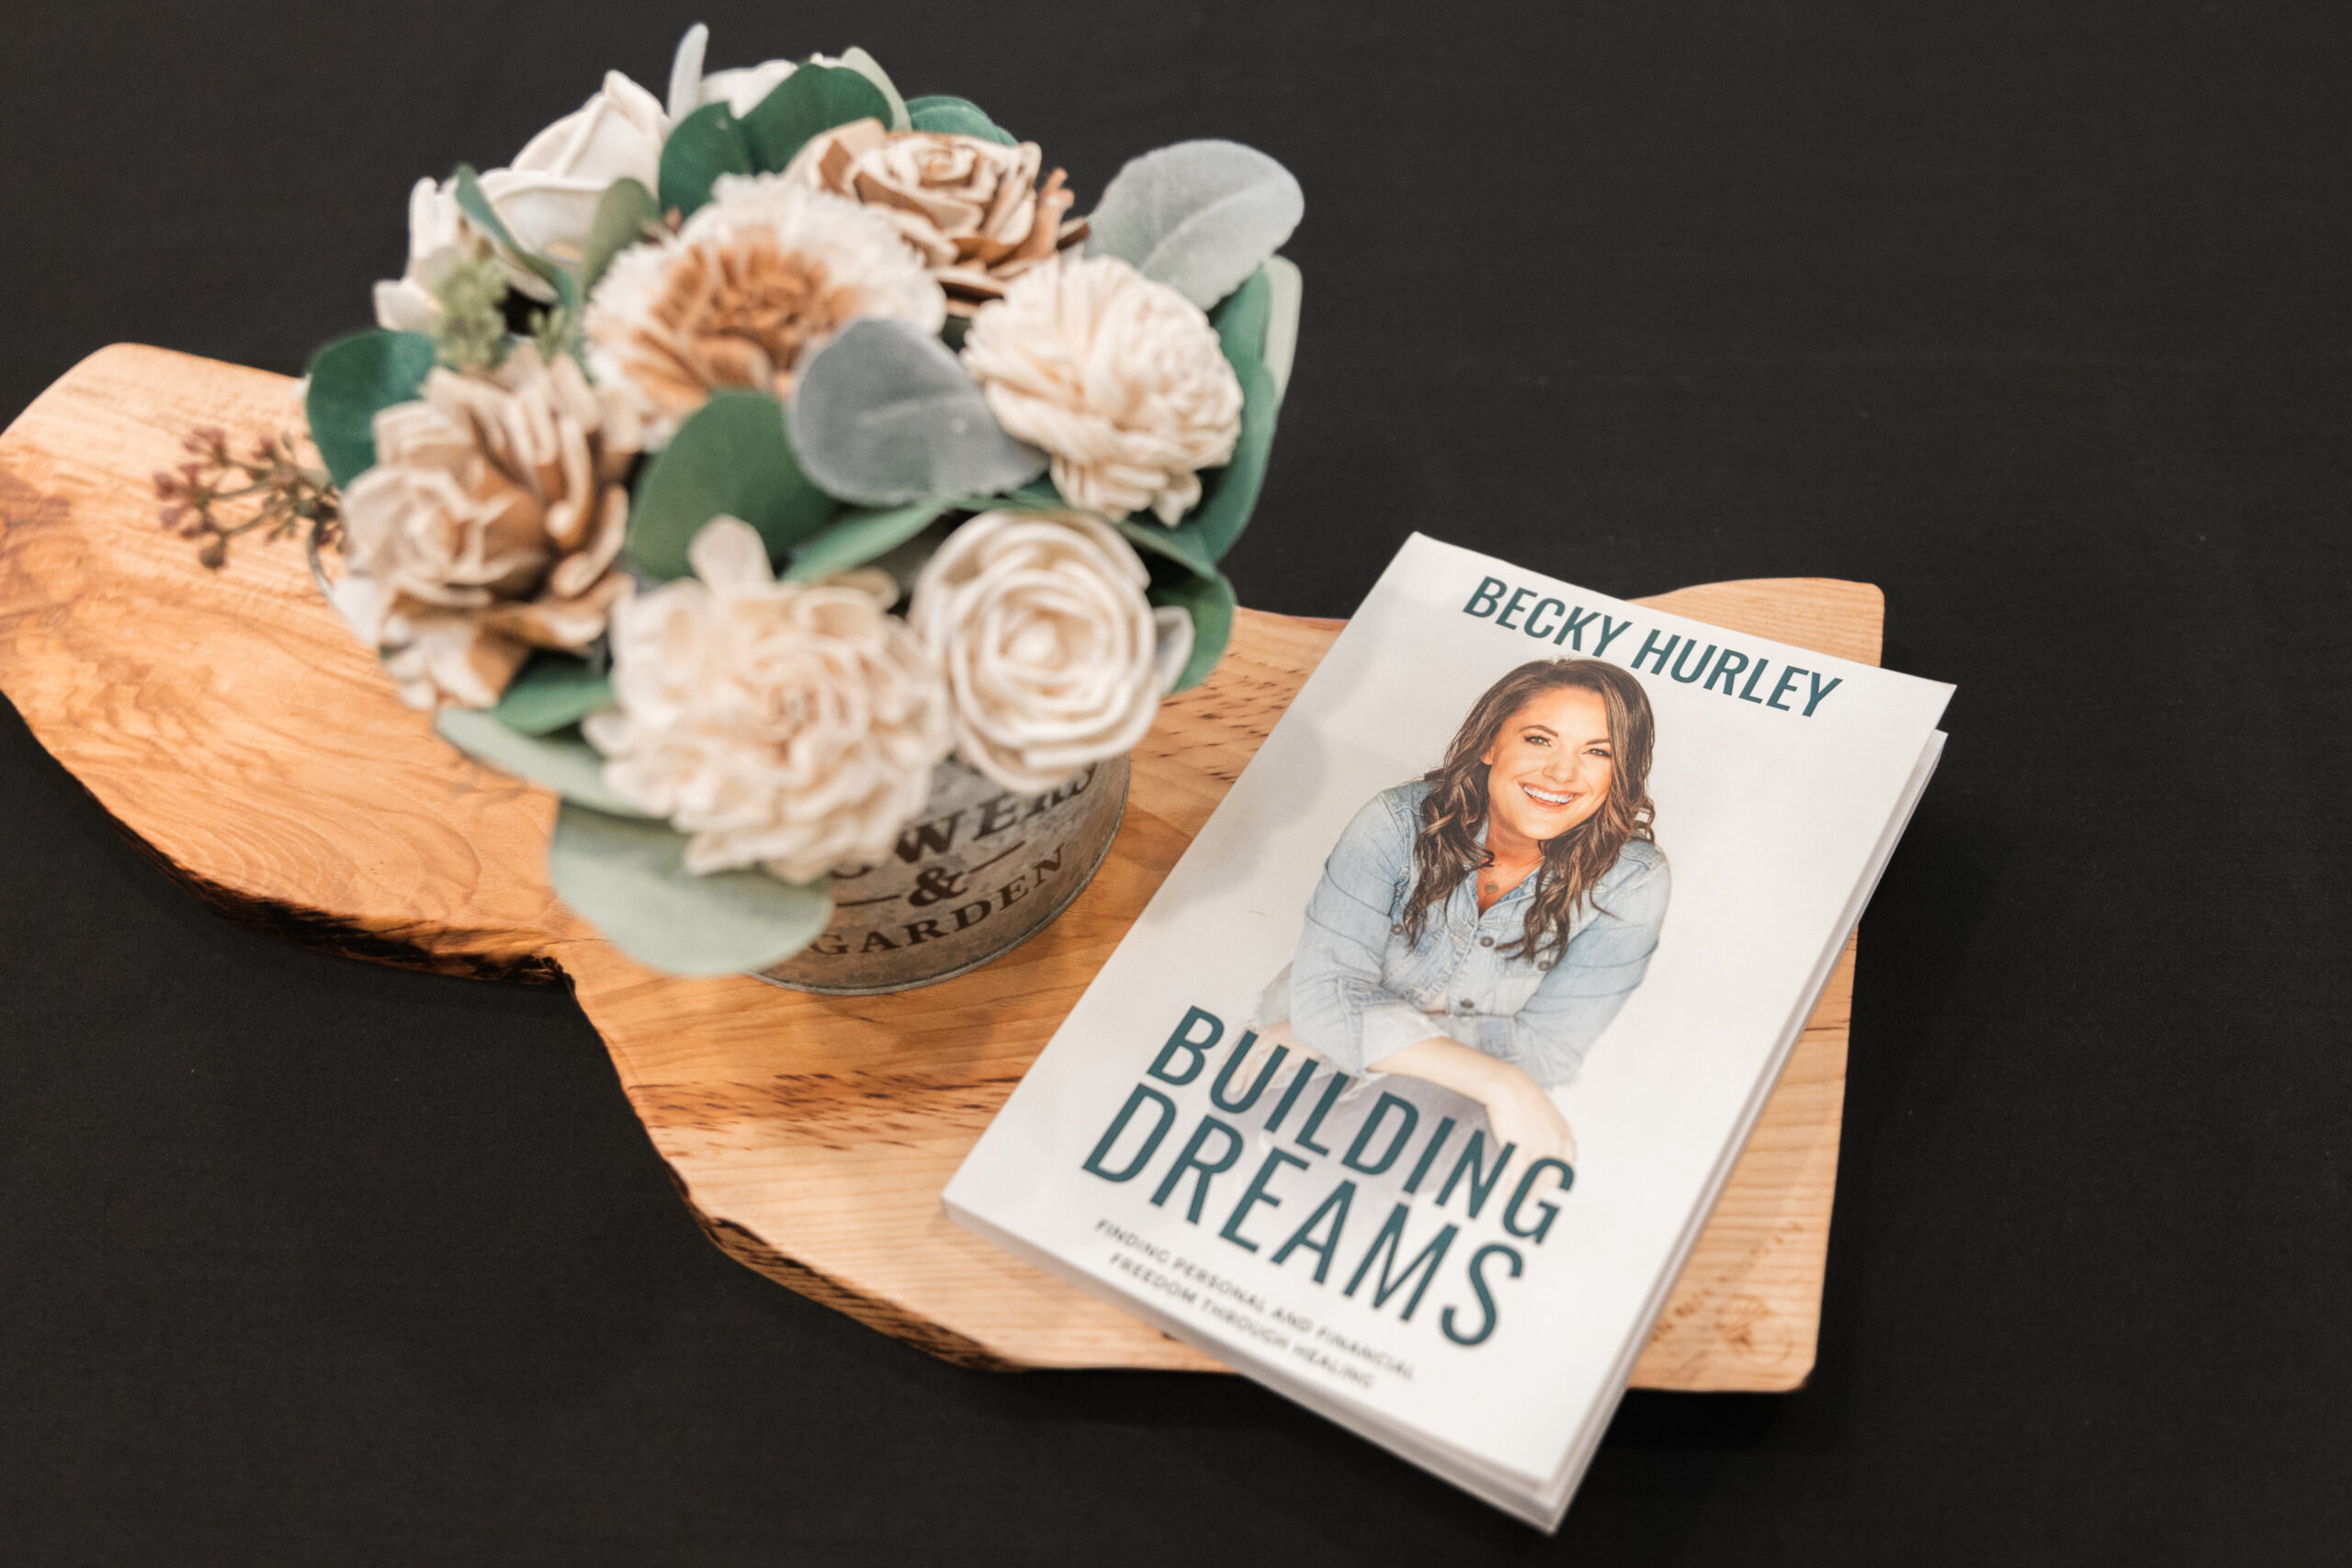 Becky Hurley Building Dreams Book